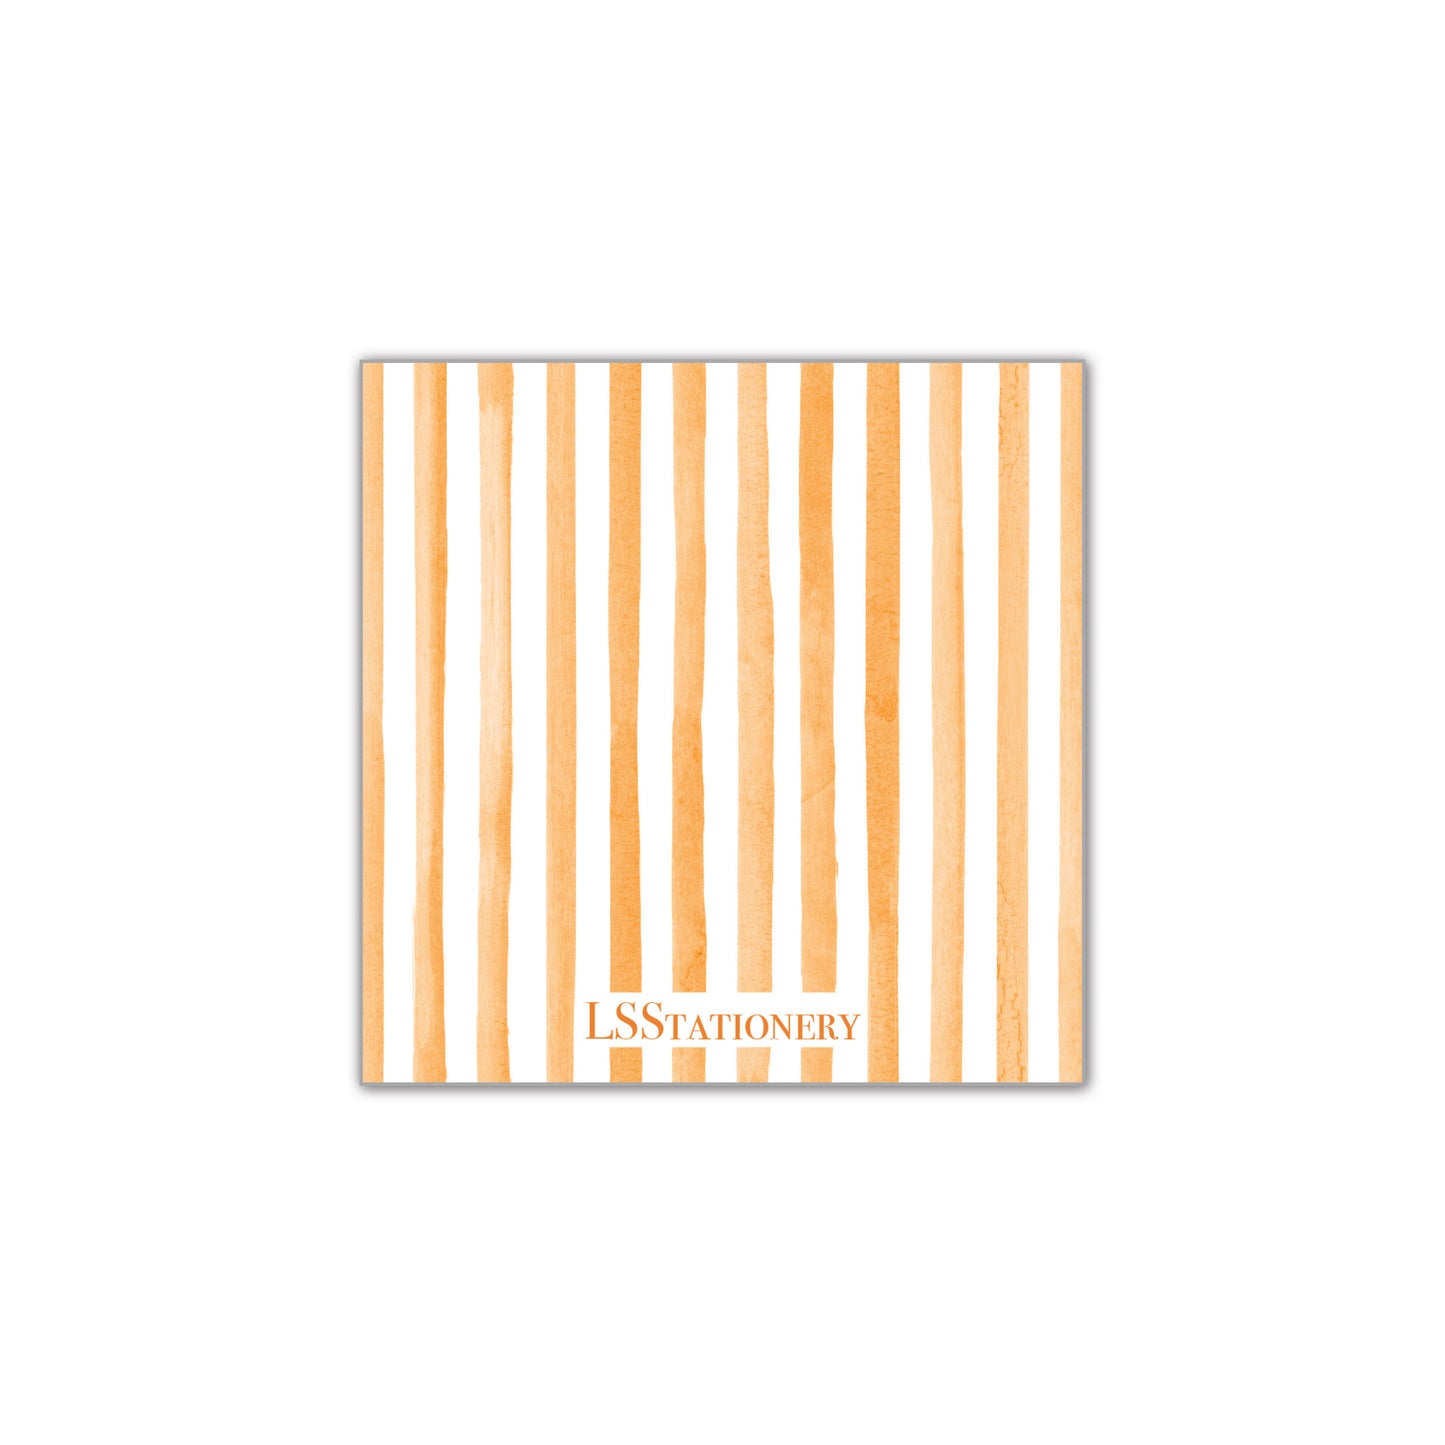 un-BOO-lievable Ghosts - orange stripe Gift Tag